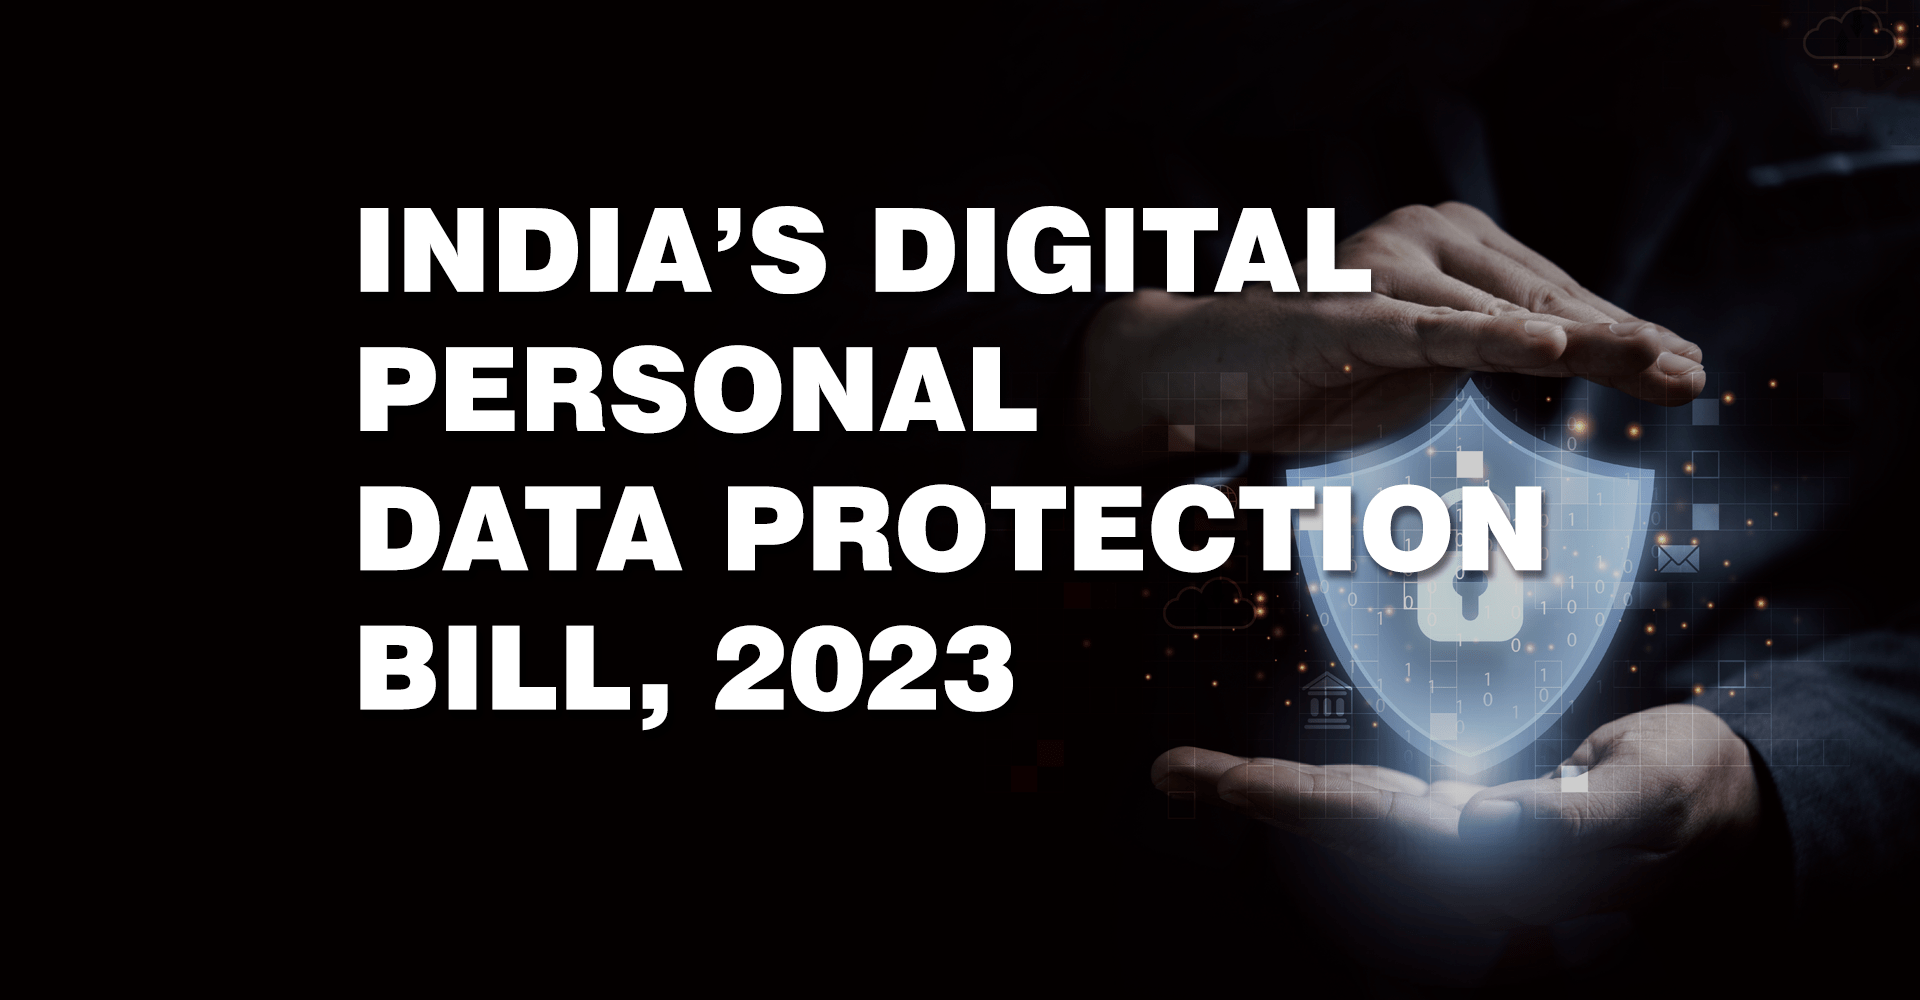 Digital Personal Data Protection Bill, 2023